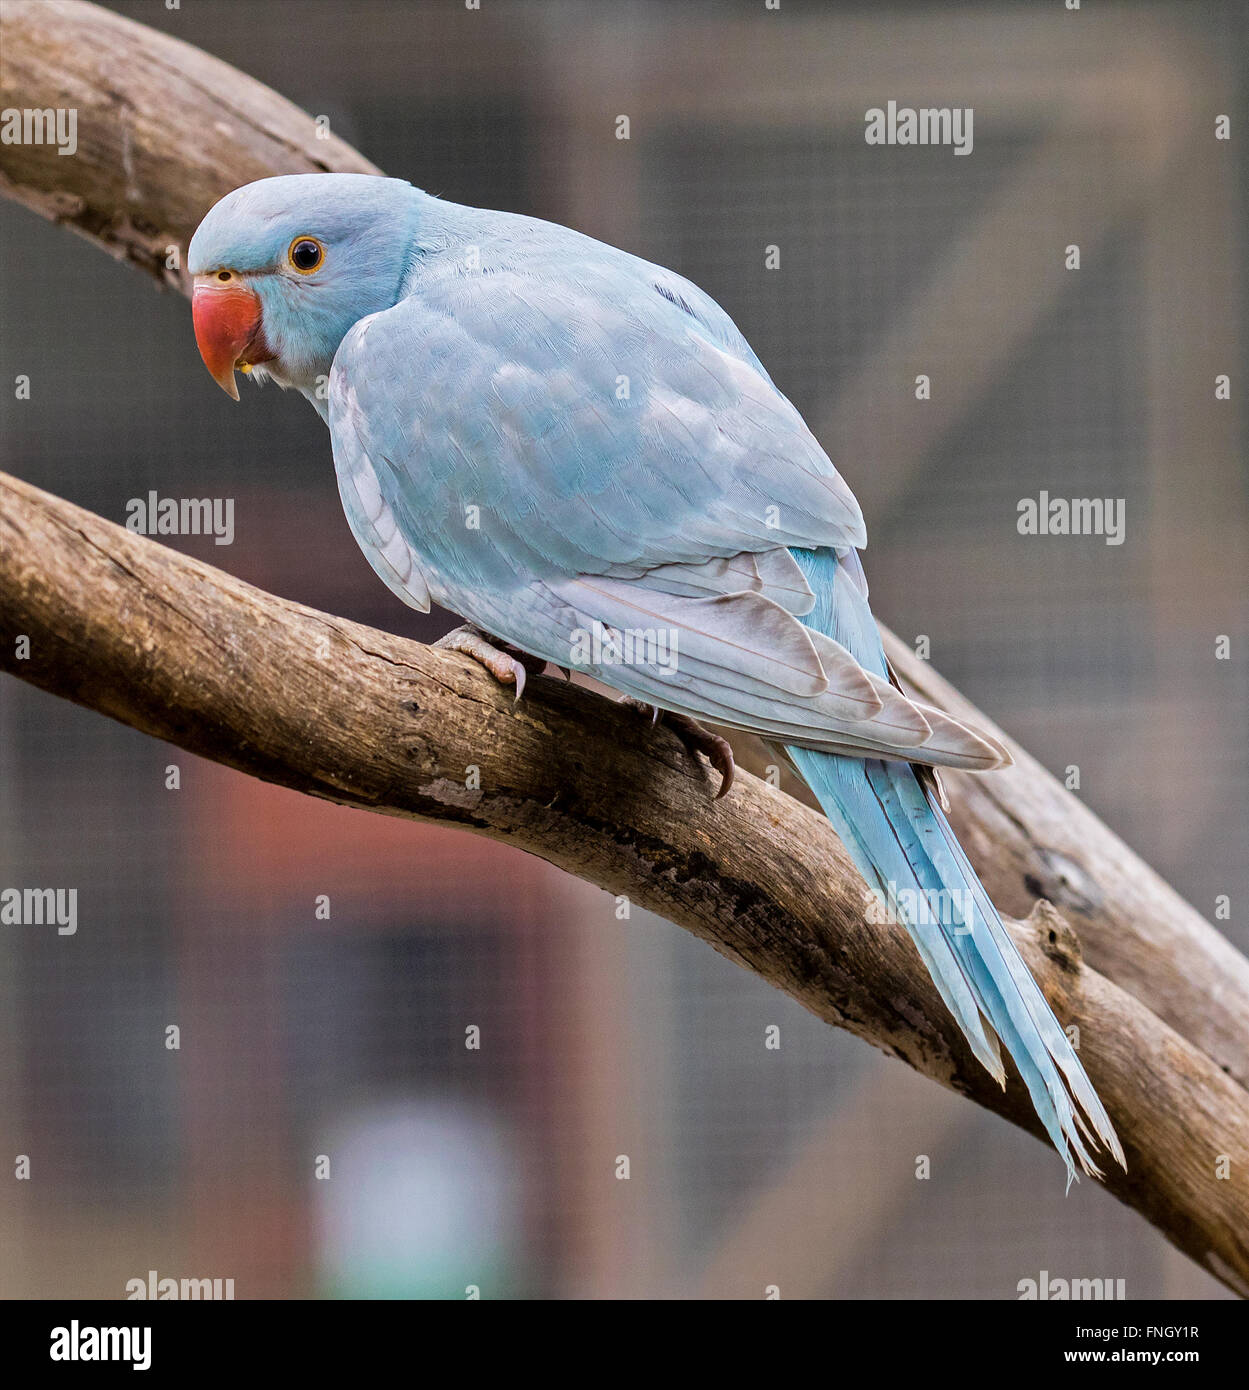 blue indian ring necked parrot, brisbane queensland australia Stock Photo